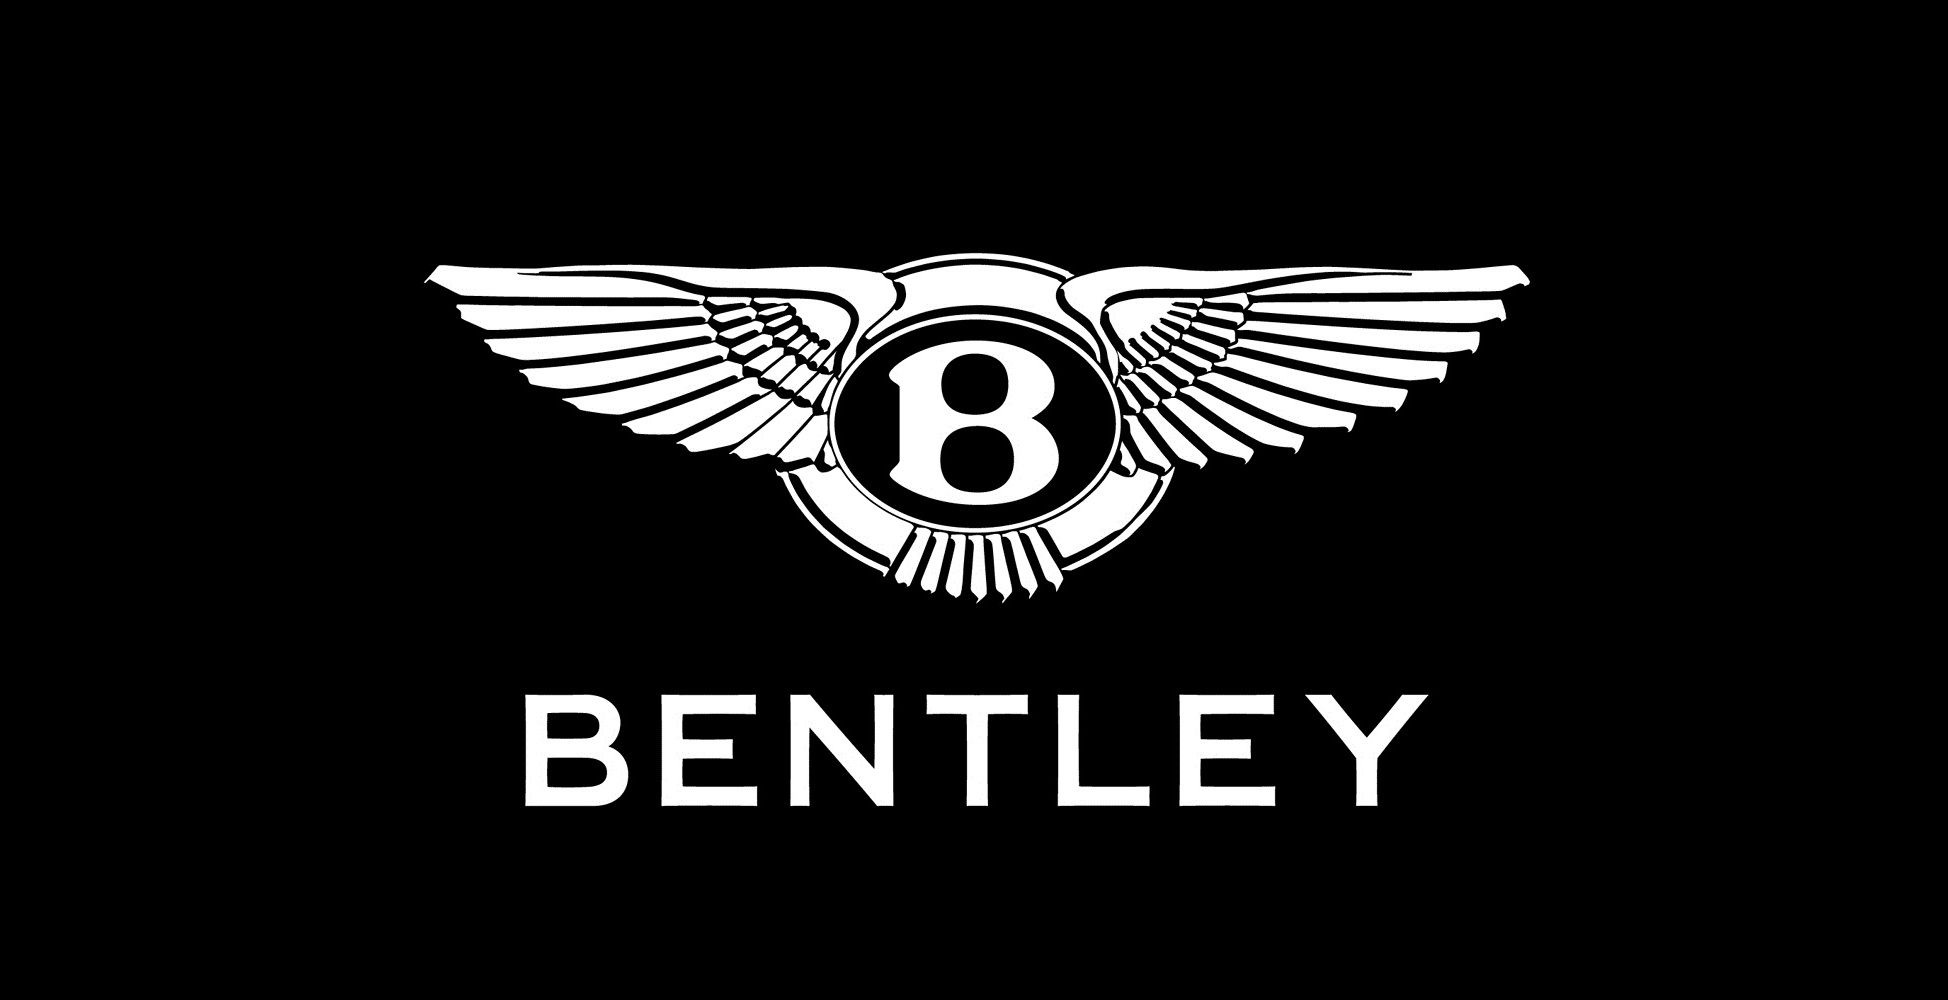 Bentley Logo Redesign via TheFutur by Mart Biemans on Dribbble